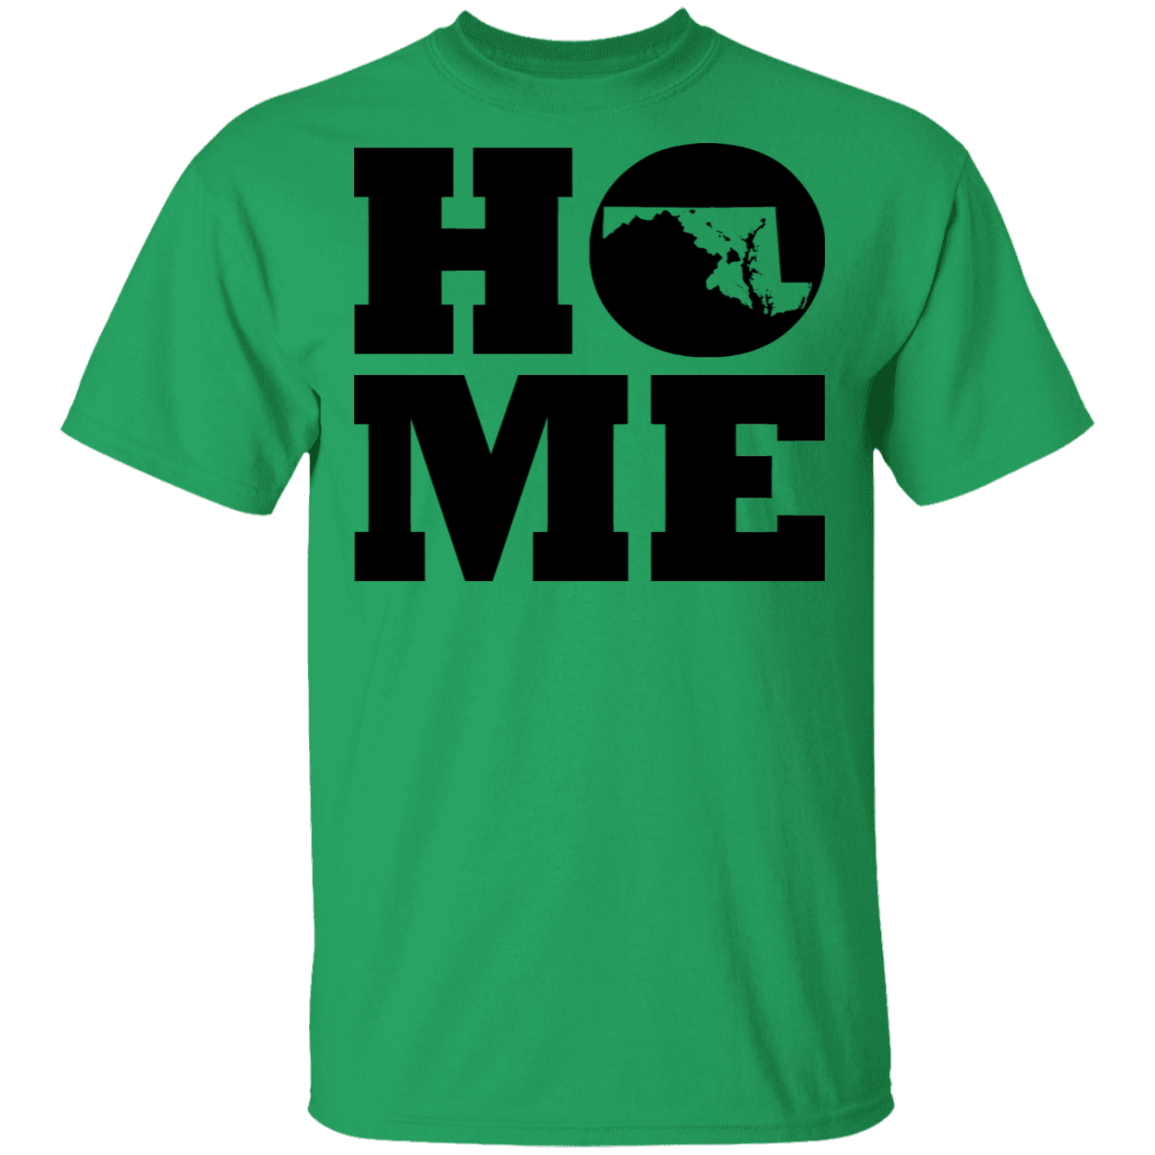 Home Roots Hawai'i and Maryland T-Shirt